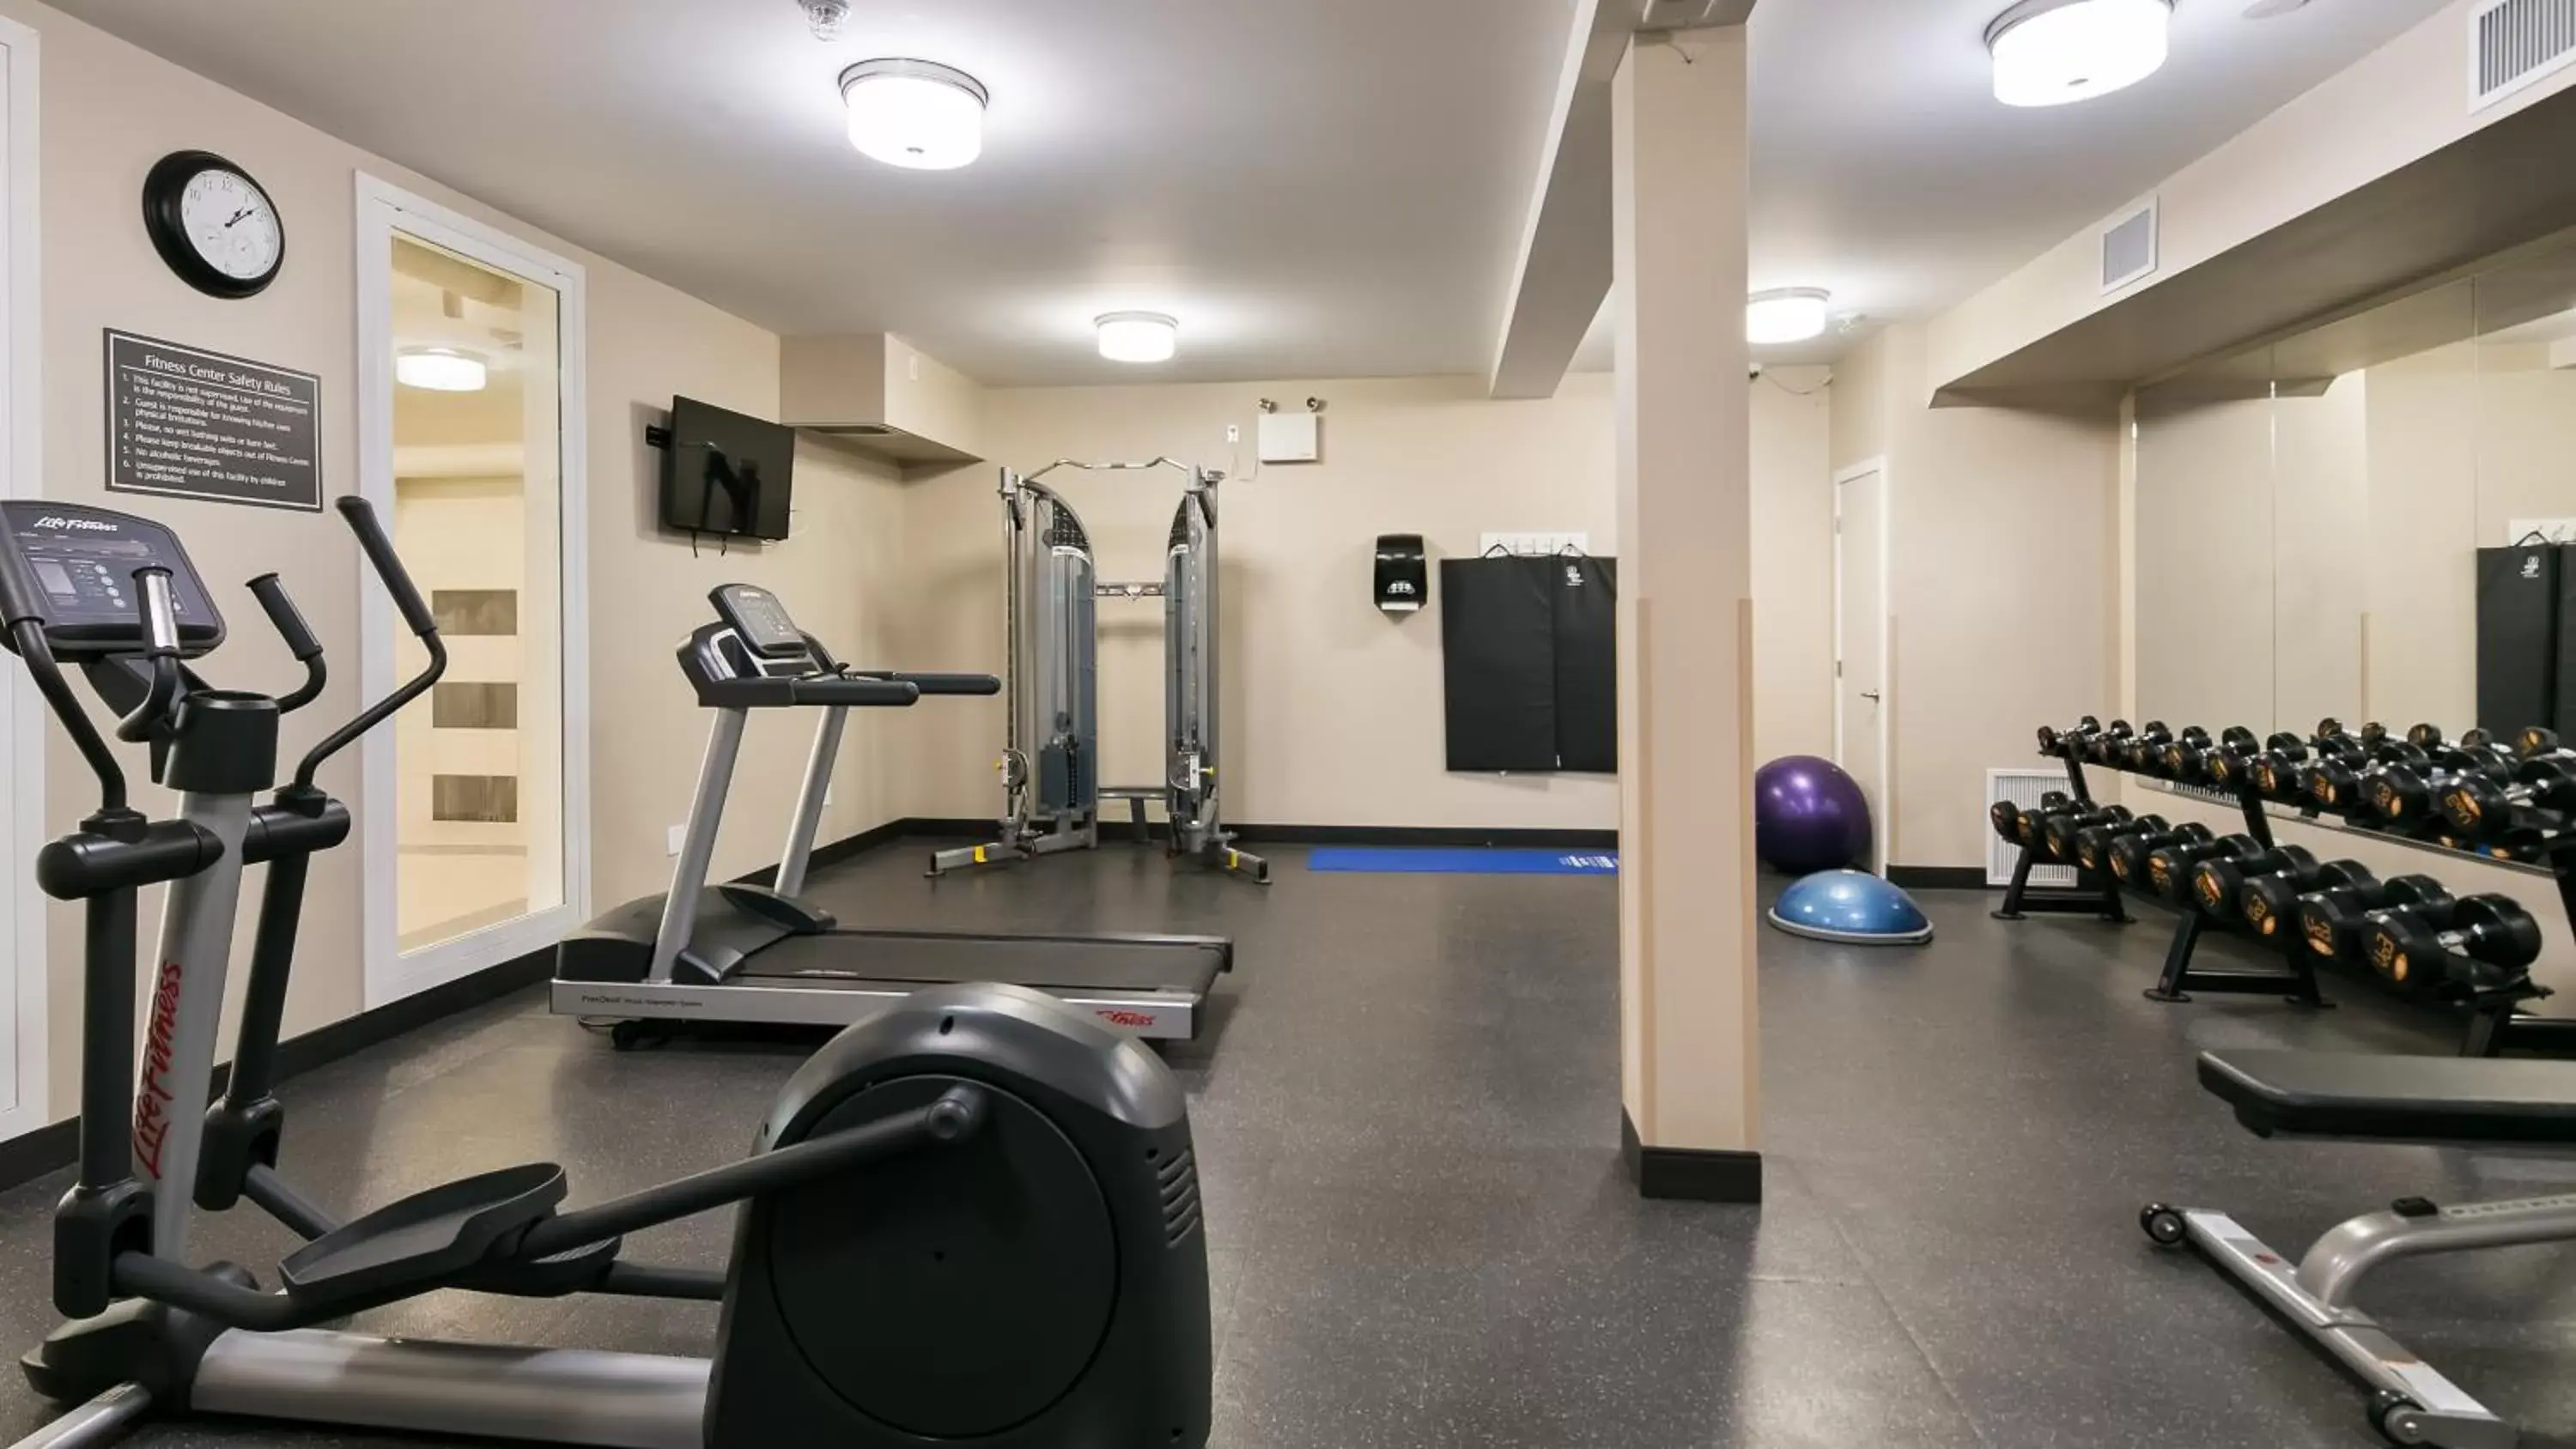 Fitness centre/facilities, Fitness Center/Facilities in Best Western PLUS Fort Saskatchewan Inn & Suites